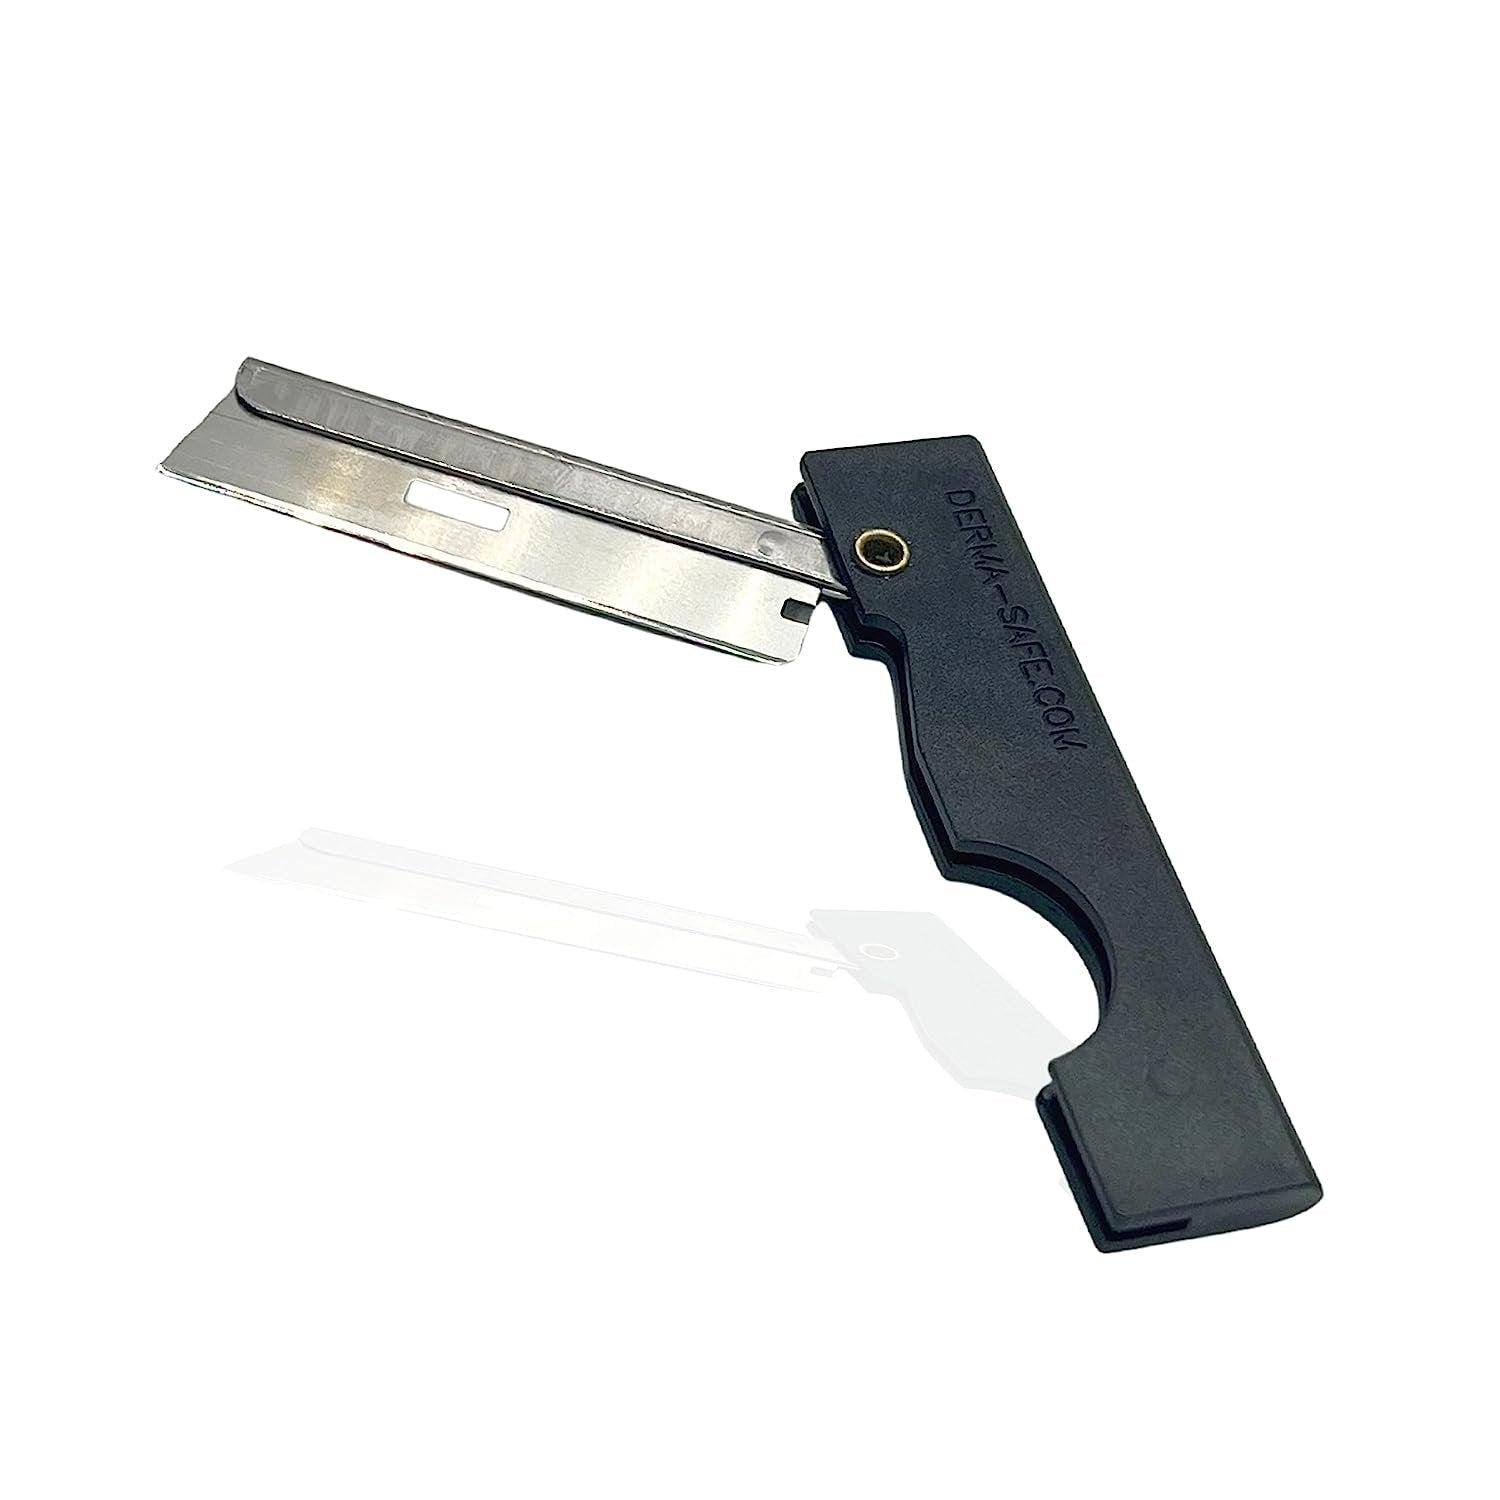 Derma-Safe Folding Utility Razor for Survival Utility and First Aid Kits - Mini Pocket Foldable Razor Blade, Folding Scalpel, (Black) 10-Pack